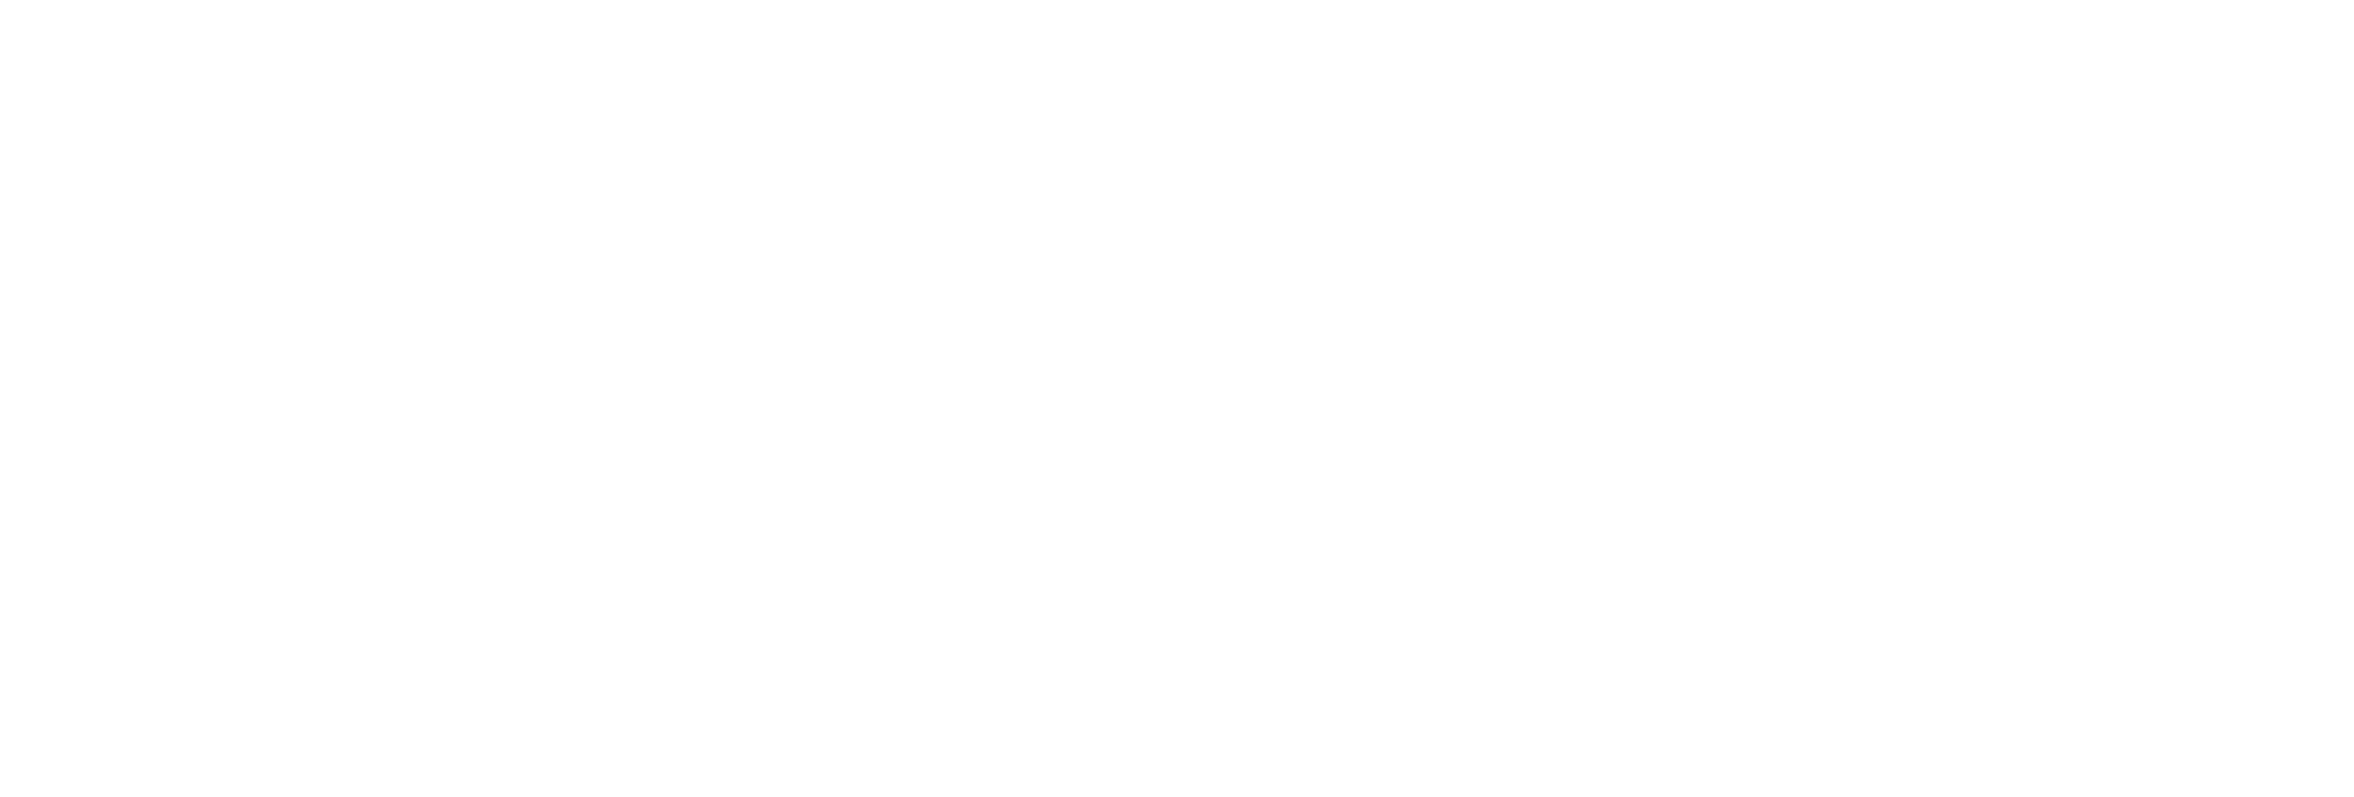 be digital, be the evolution, be BRQ em branco